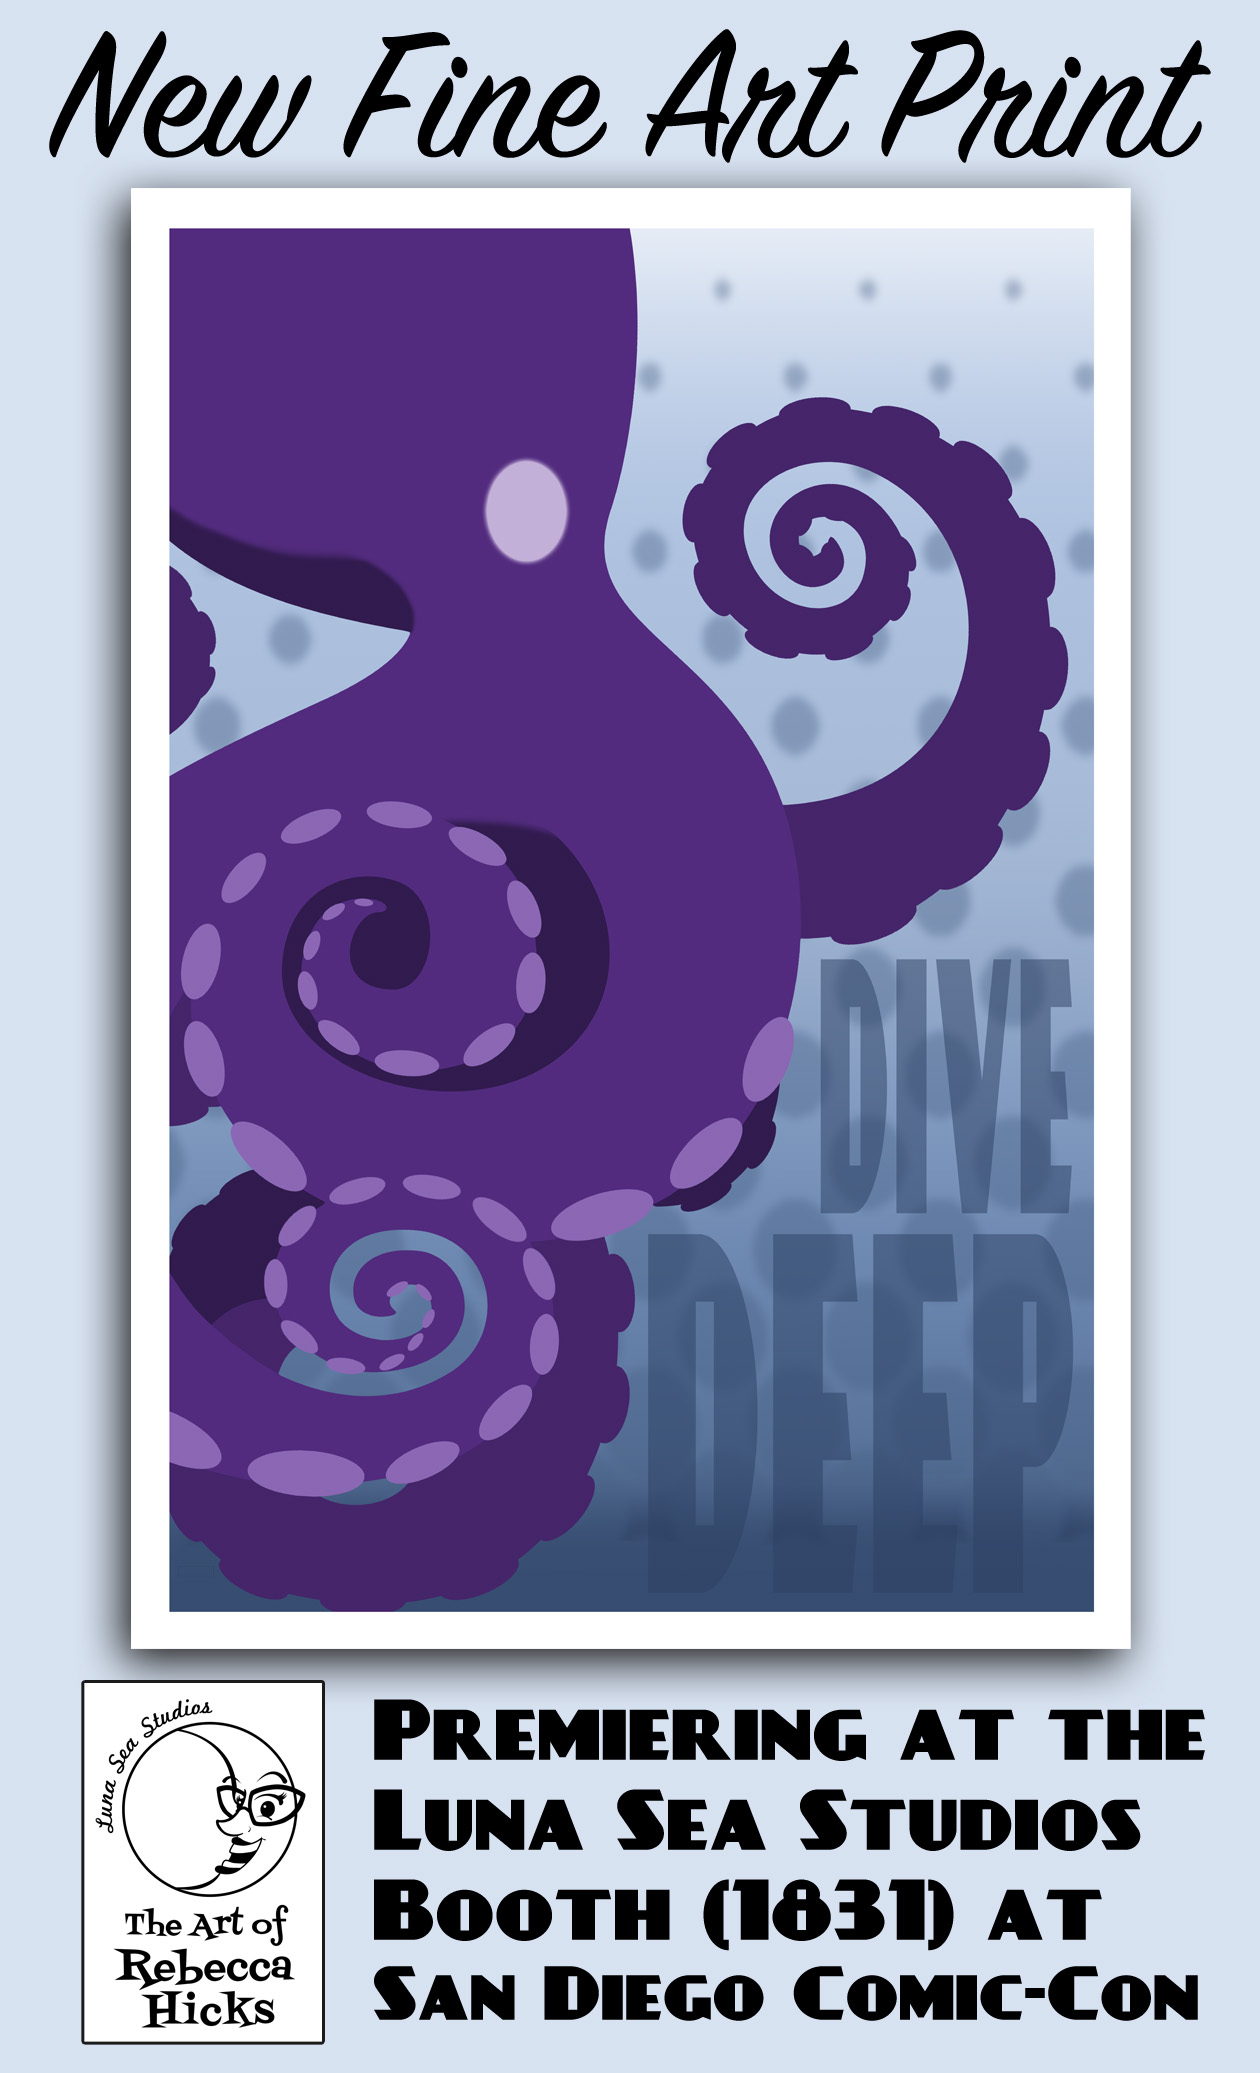 Promotional flyer for “Dive Deep” fine art print featuring an octopus